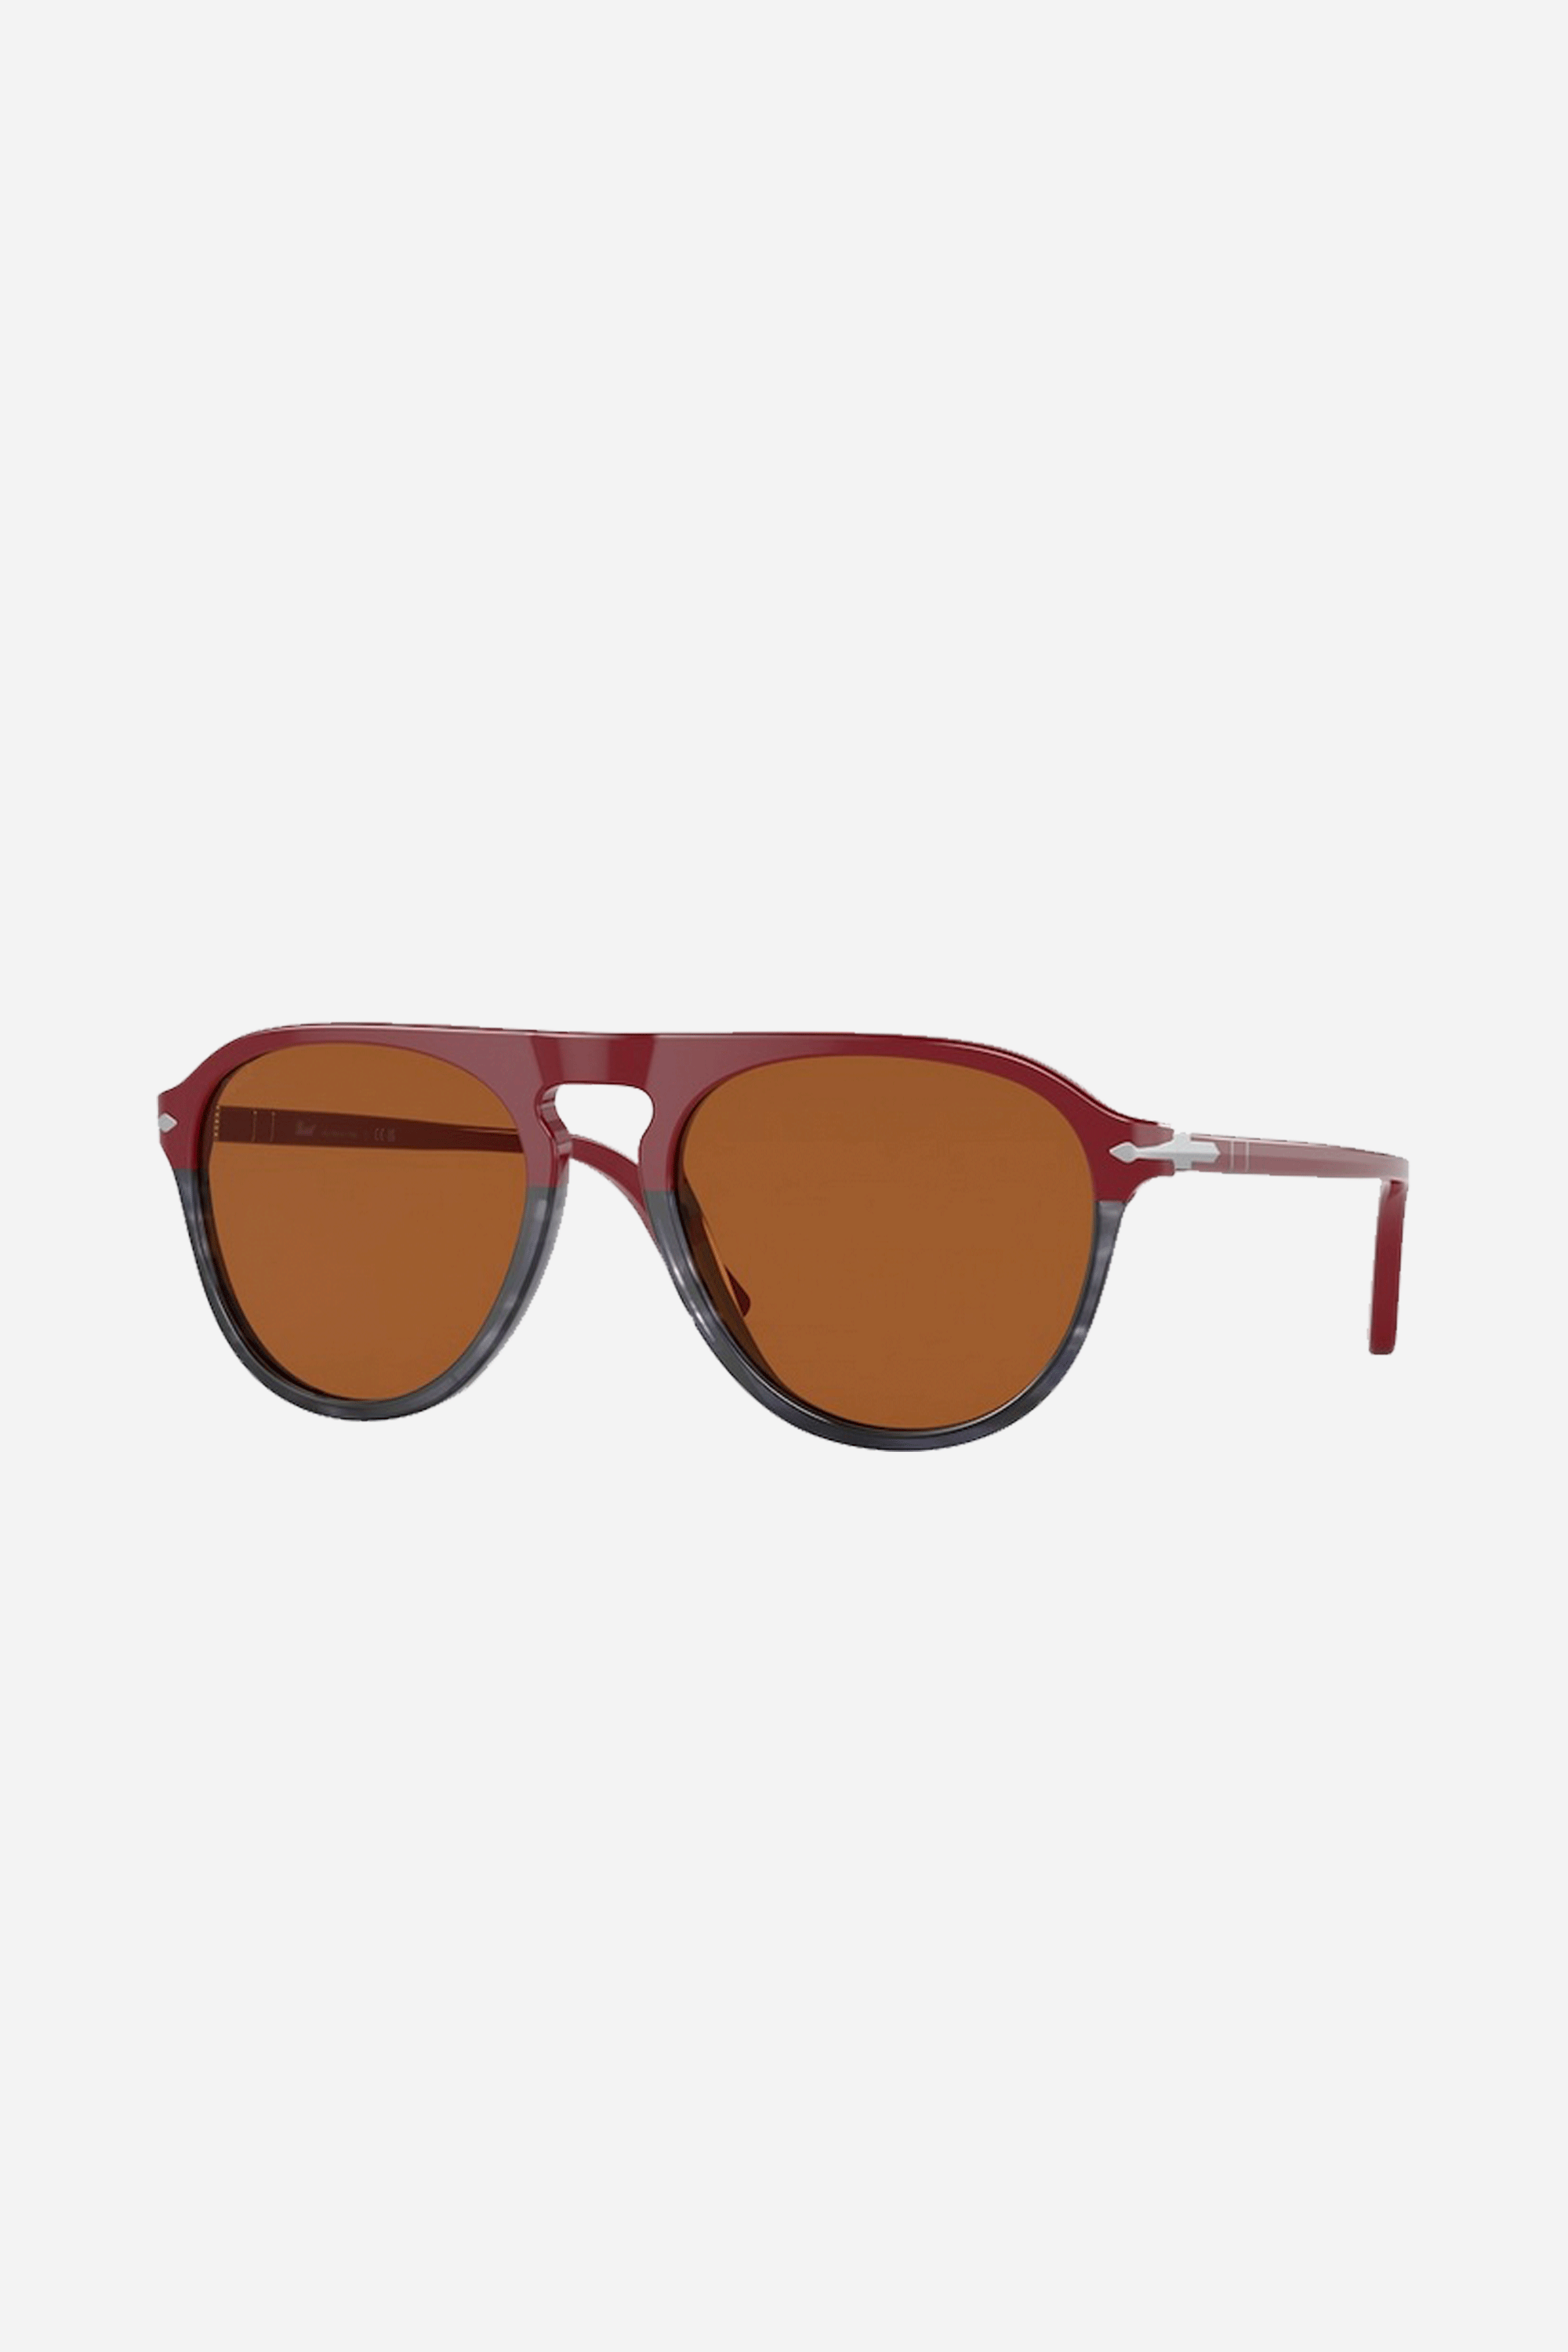 Persol colored pilot sunglasses - Eyewear Club